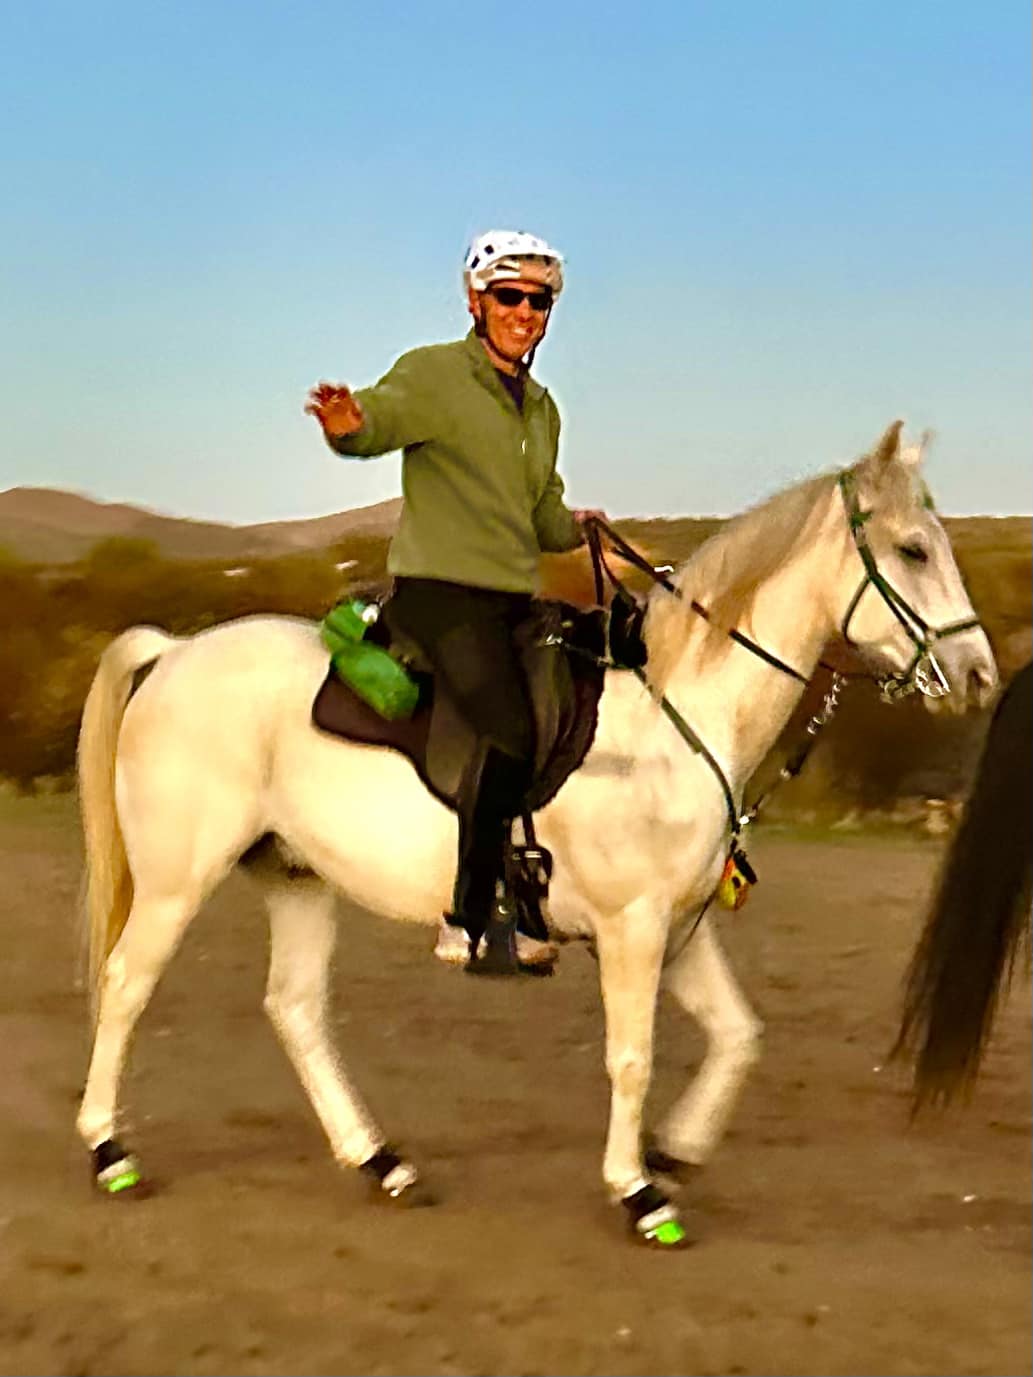 Lucian riding Sandman horse waving